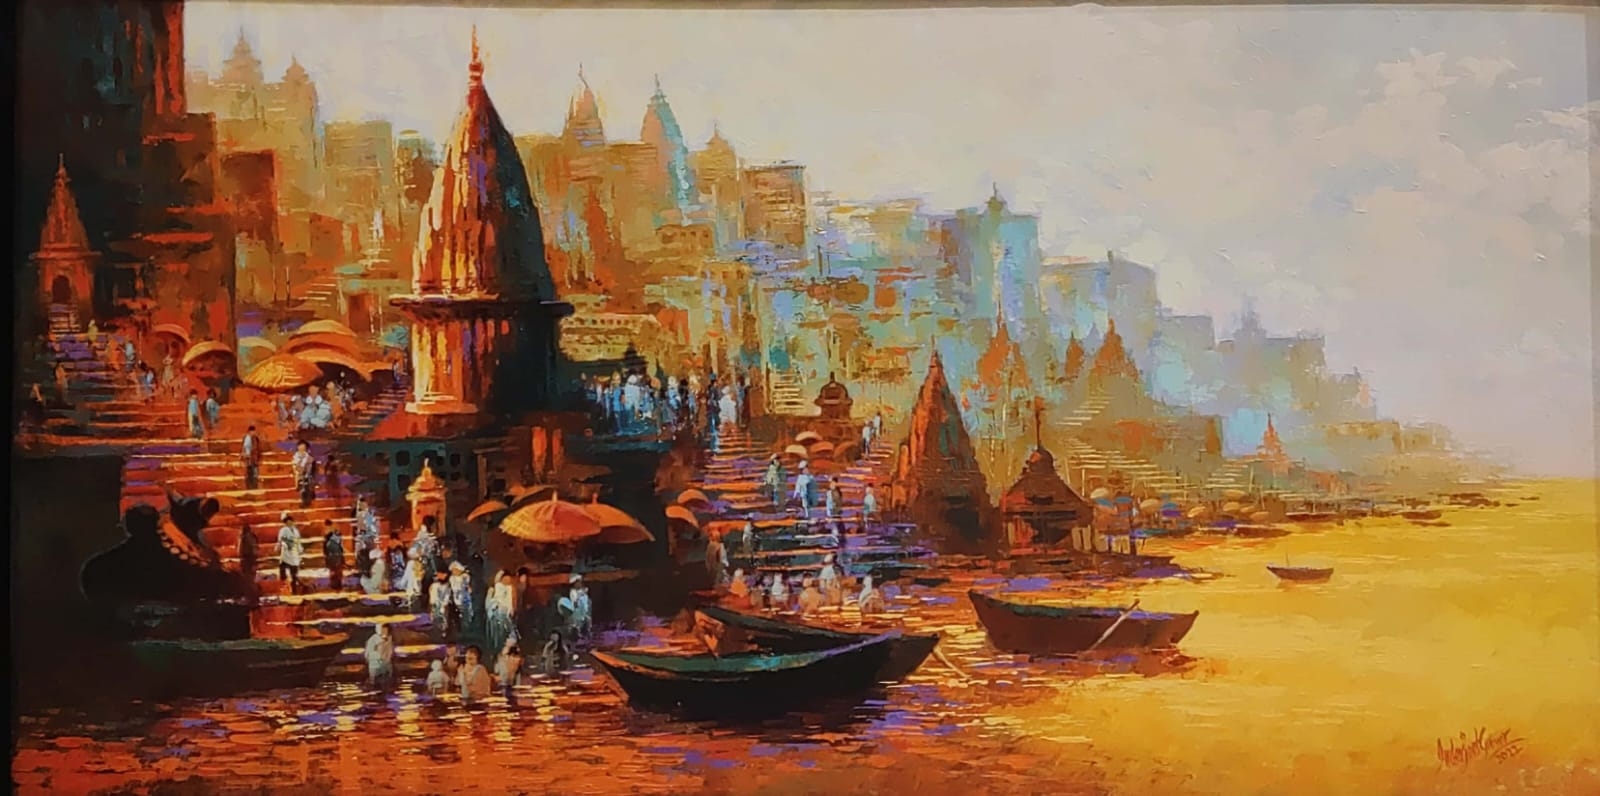 Vibrant Varanasi